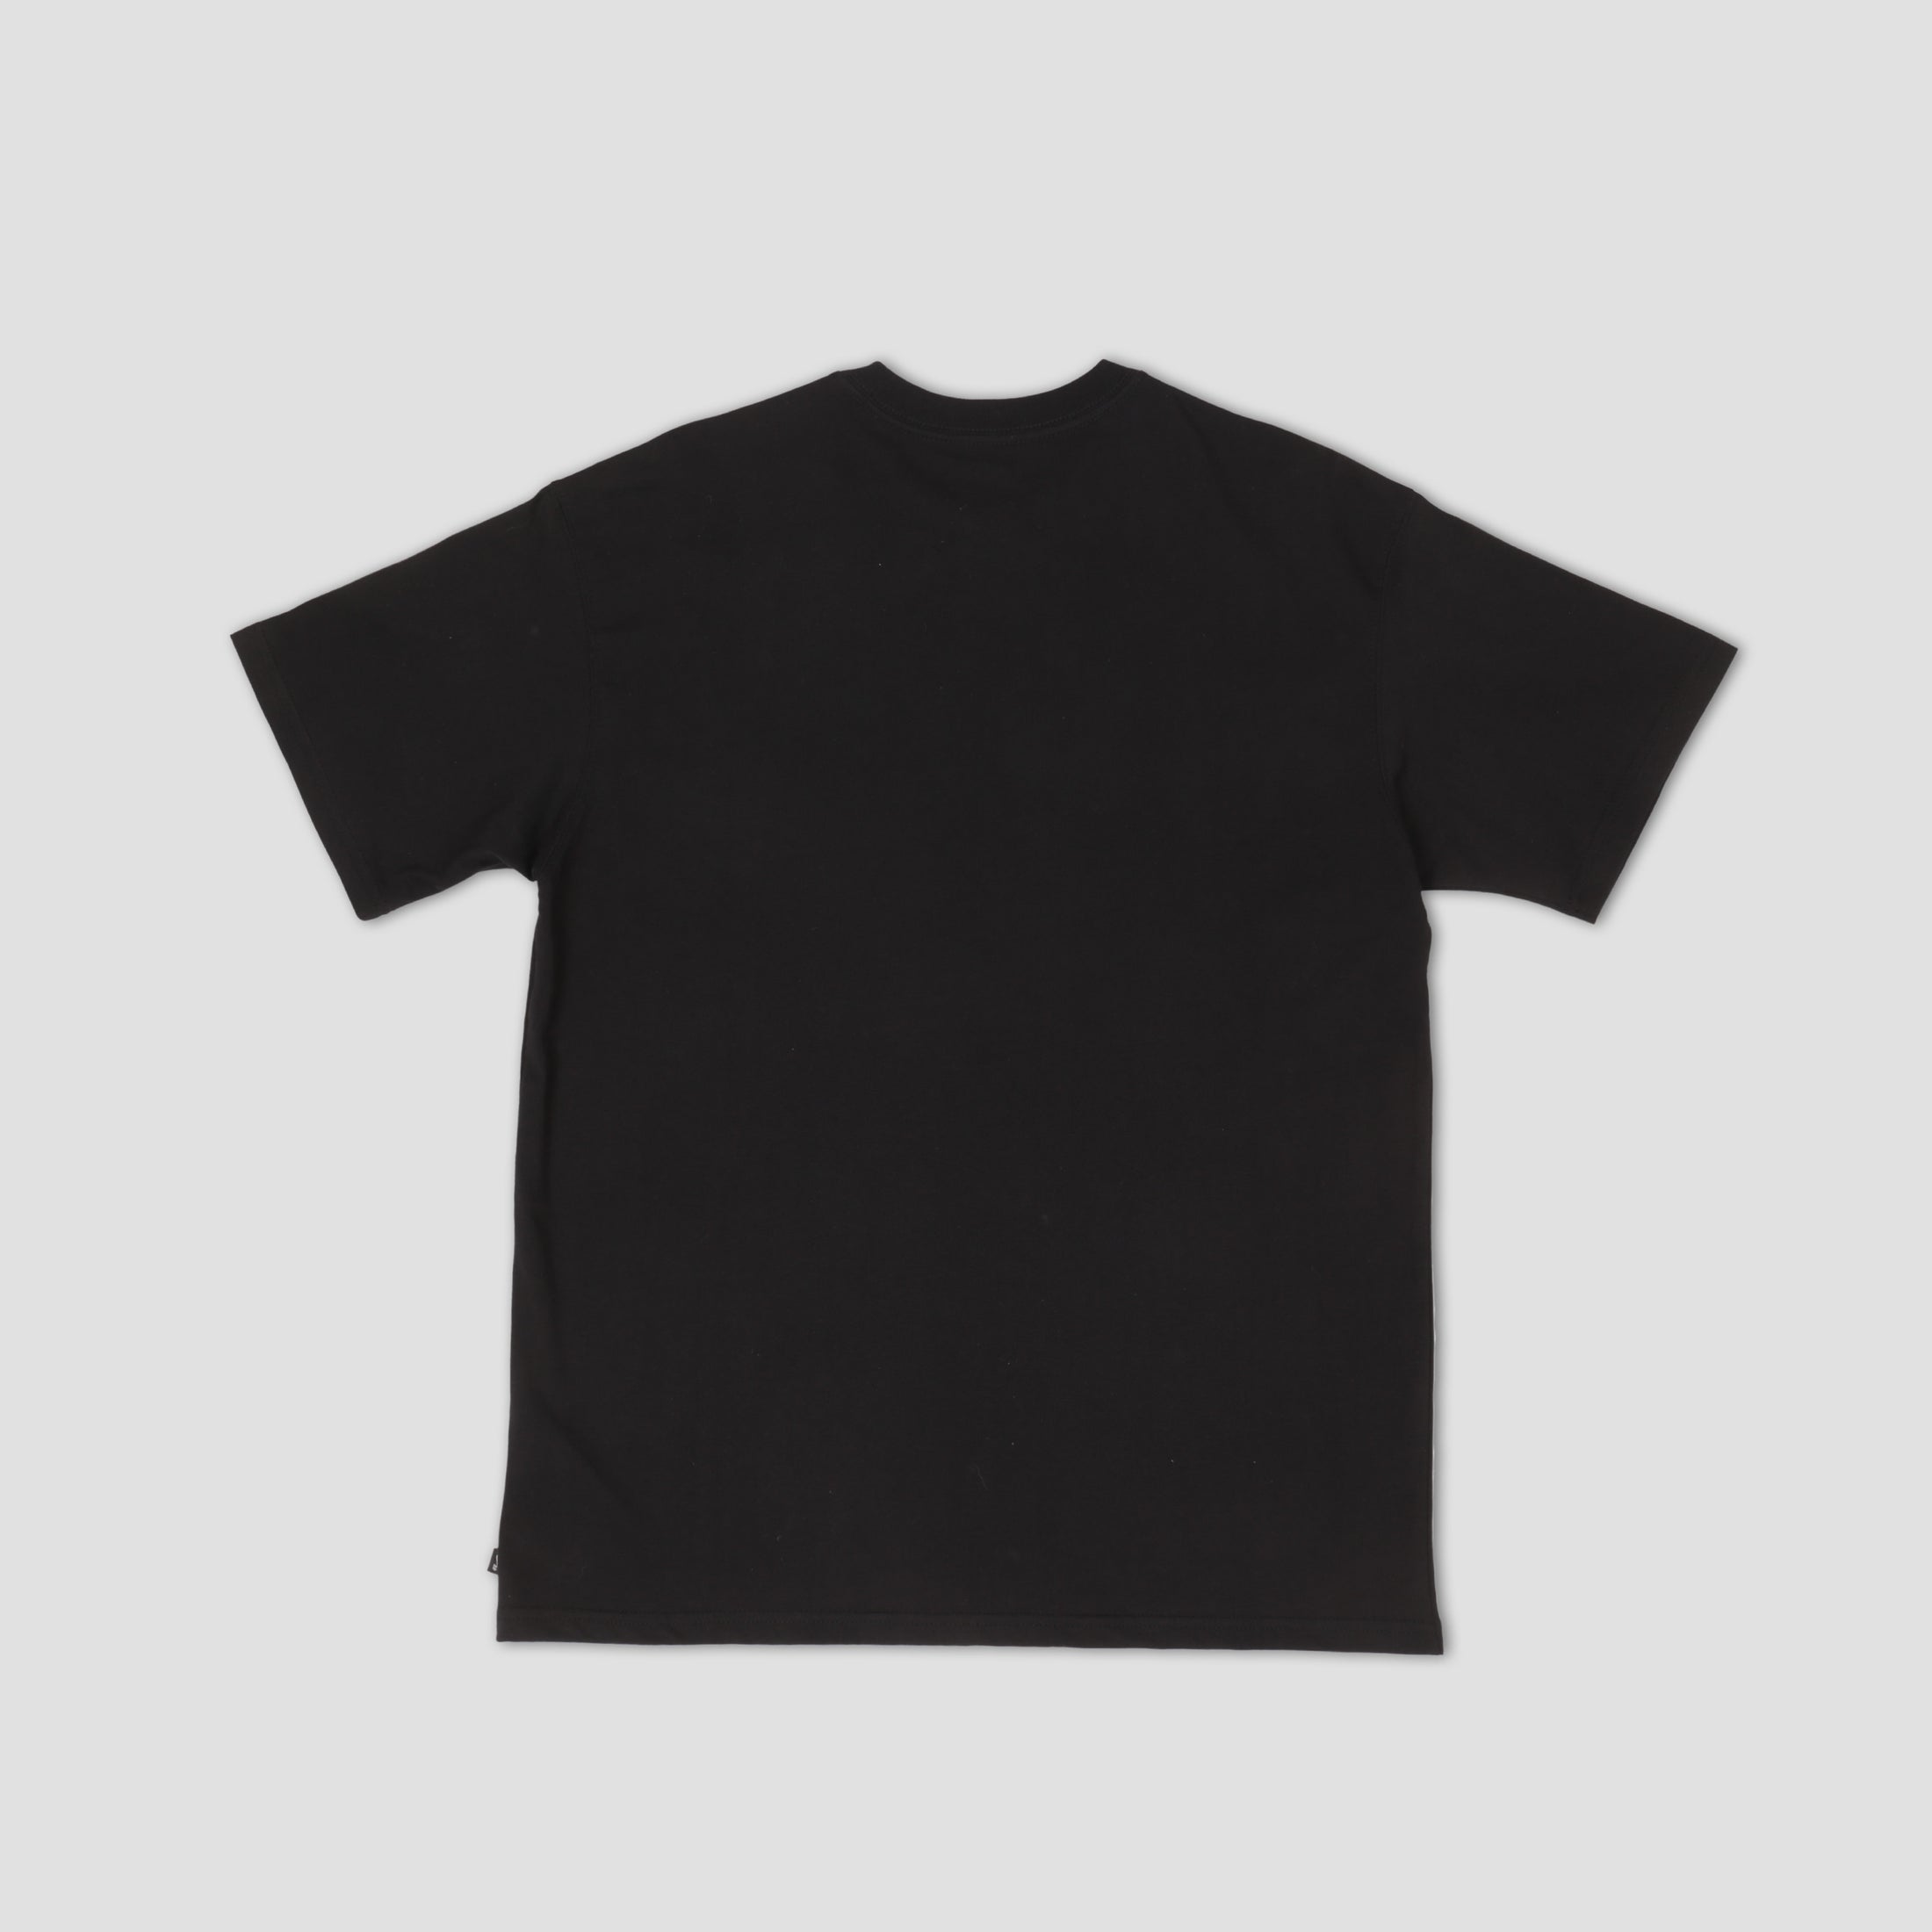 Nike SB Toy Hammer T-Shirt Black